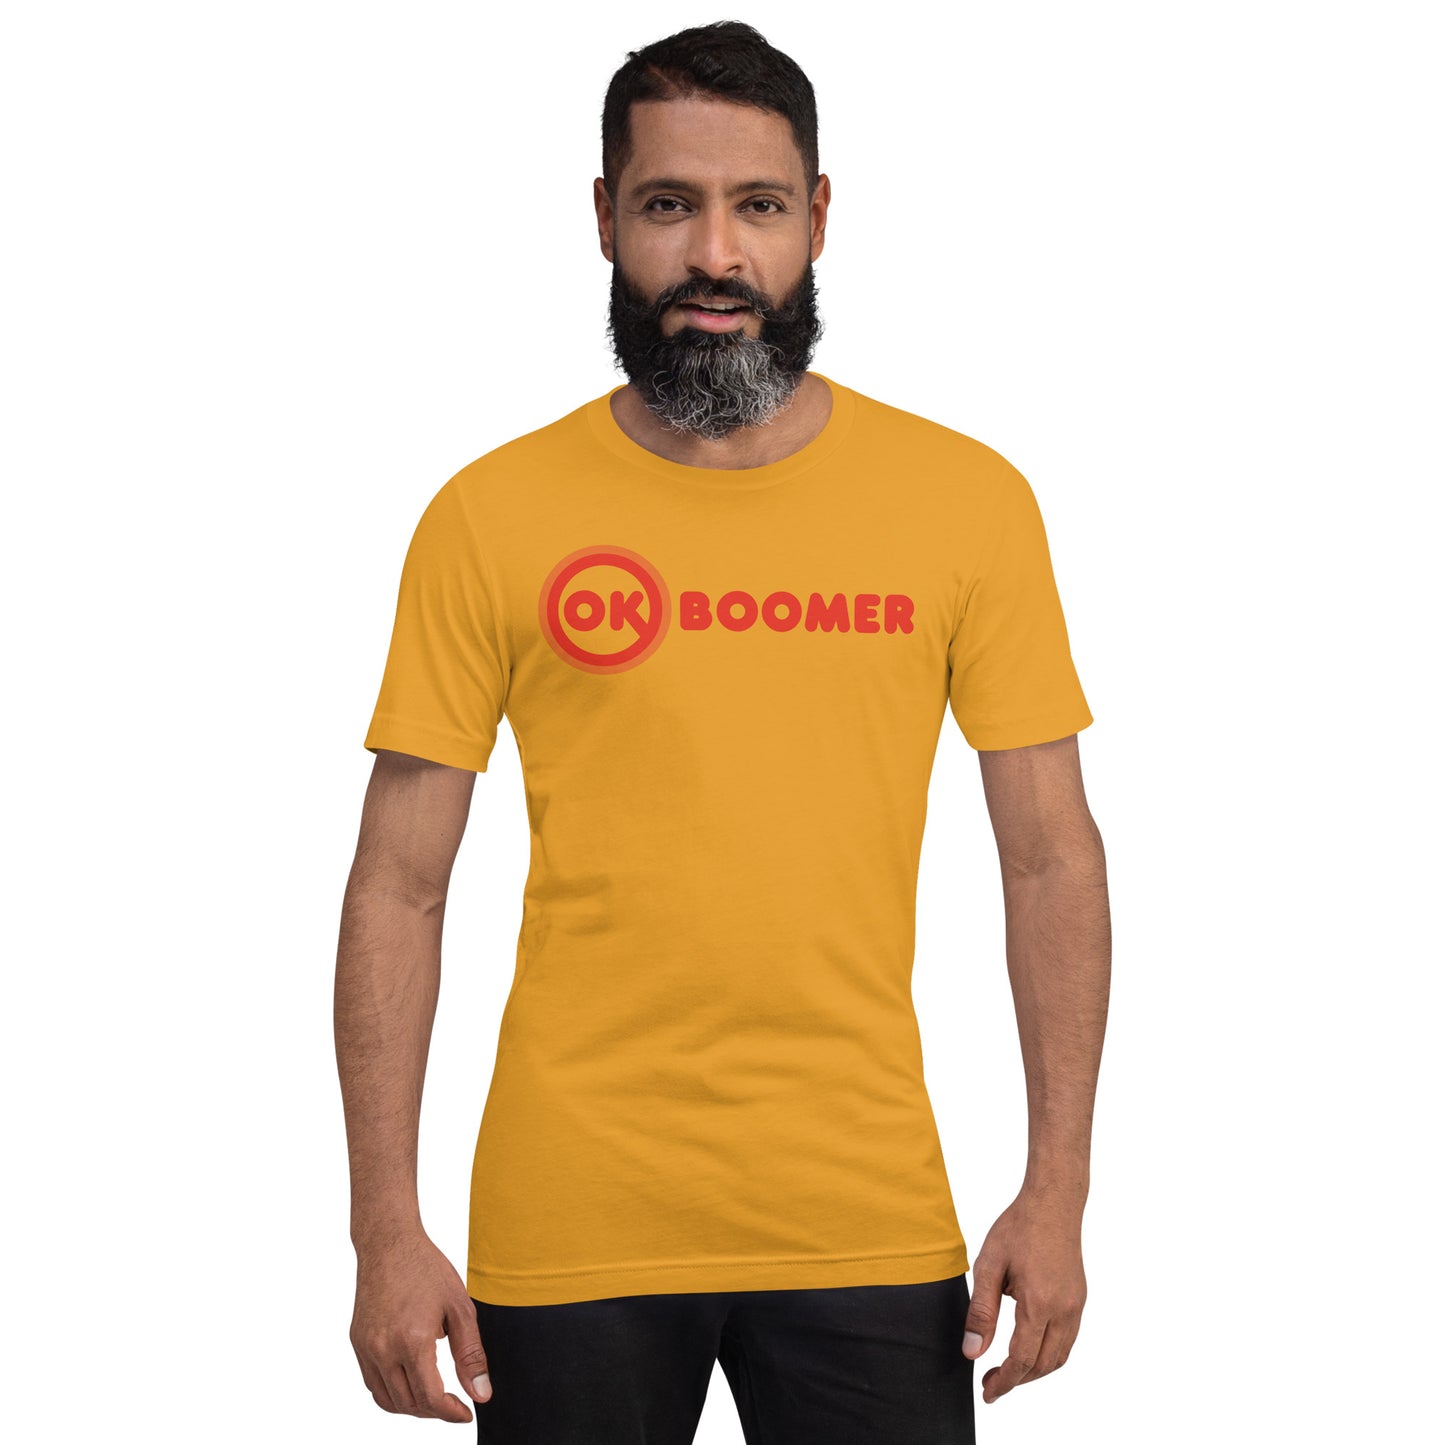 Circle-OK Boomer t-shirt